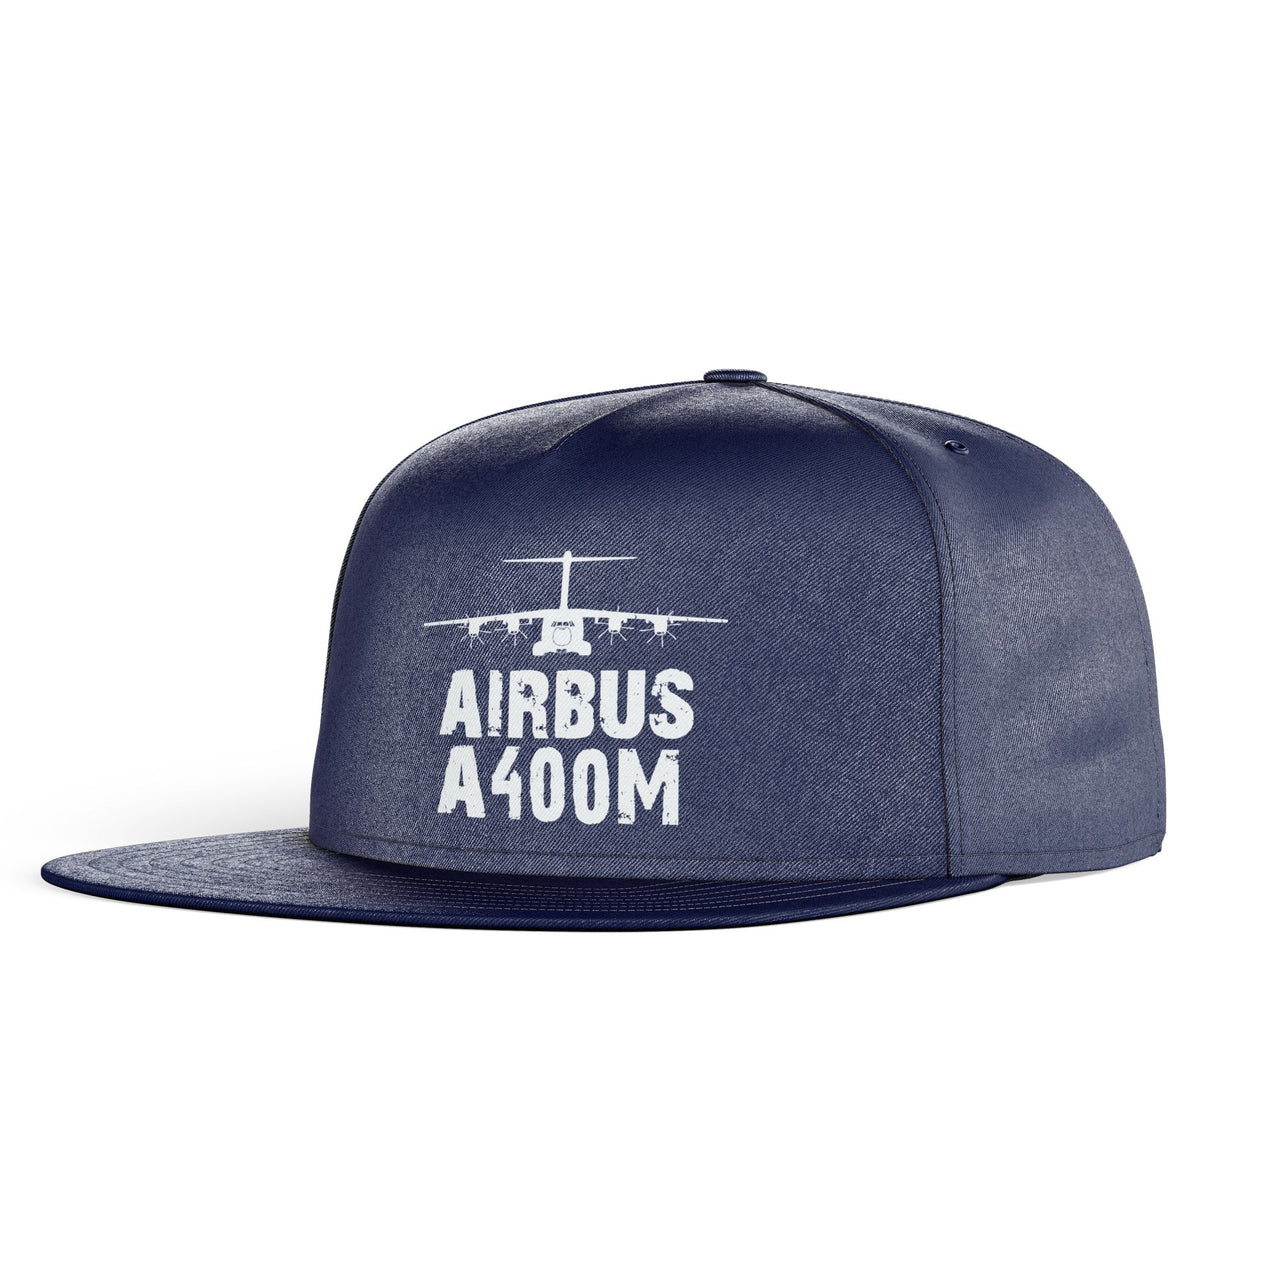 Airbus A400M & Plane Designed Snapback Caps & Hats